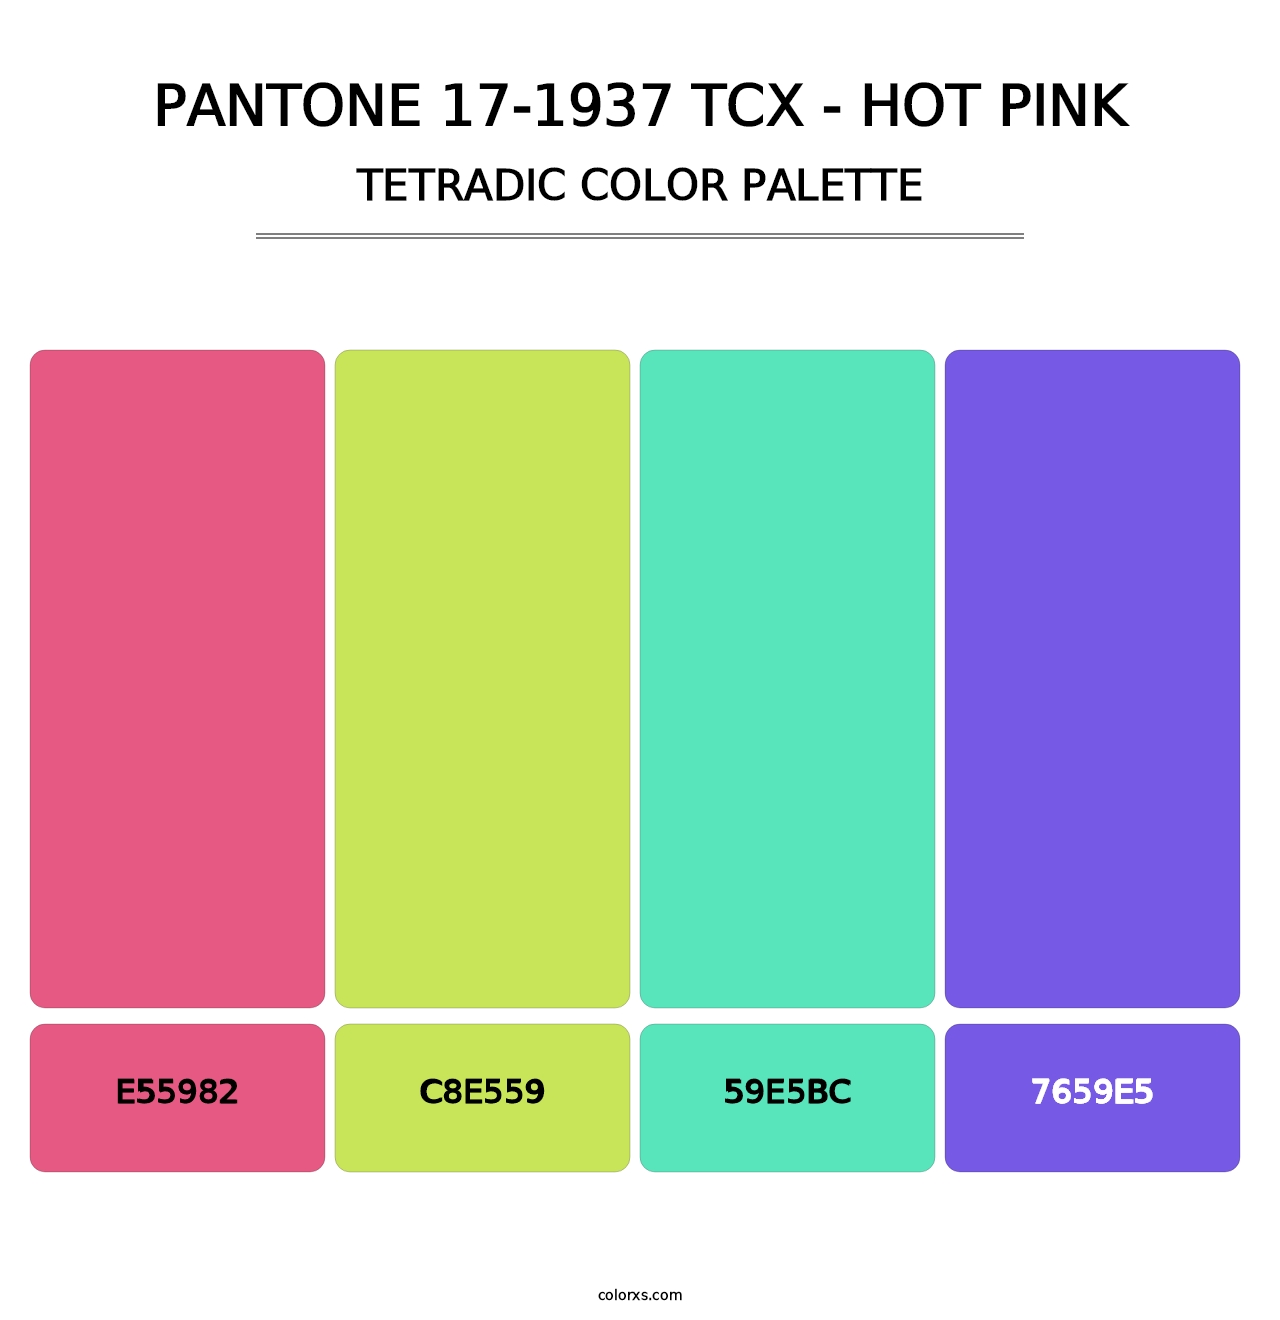 PANTONE 17-1937 TCX - Hot Pink - Tetradic Color Palette